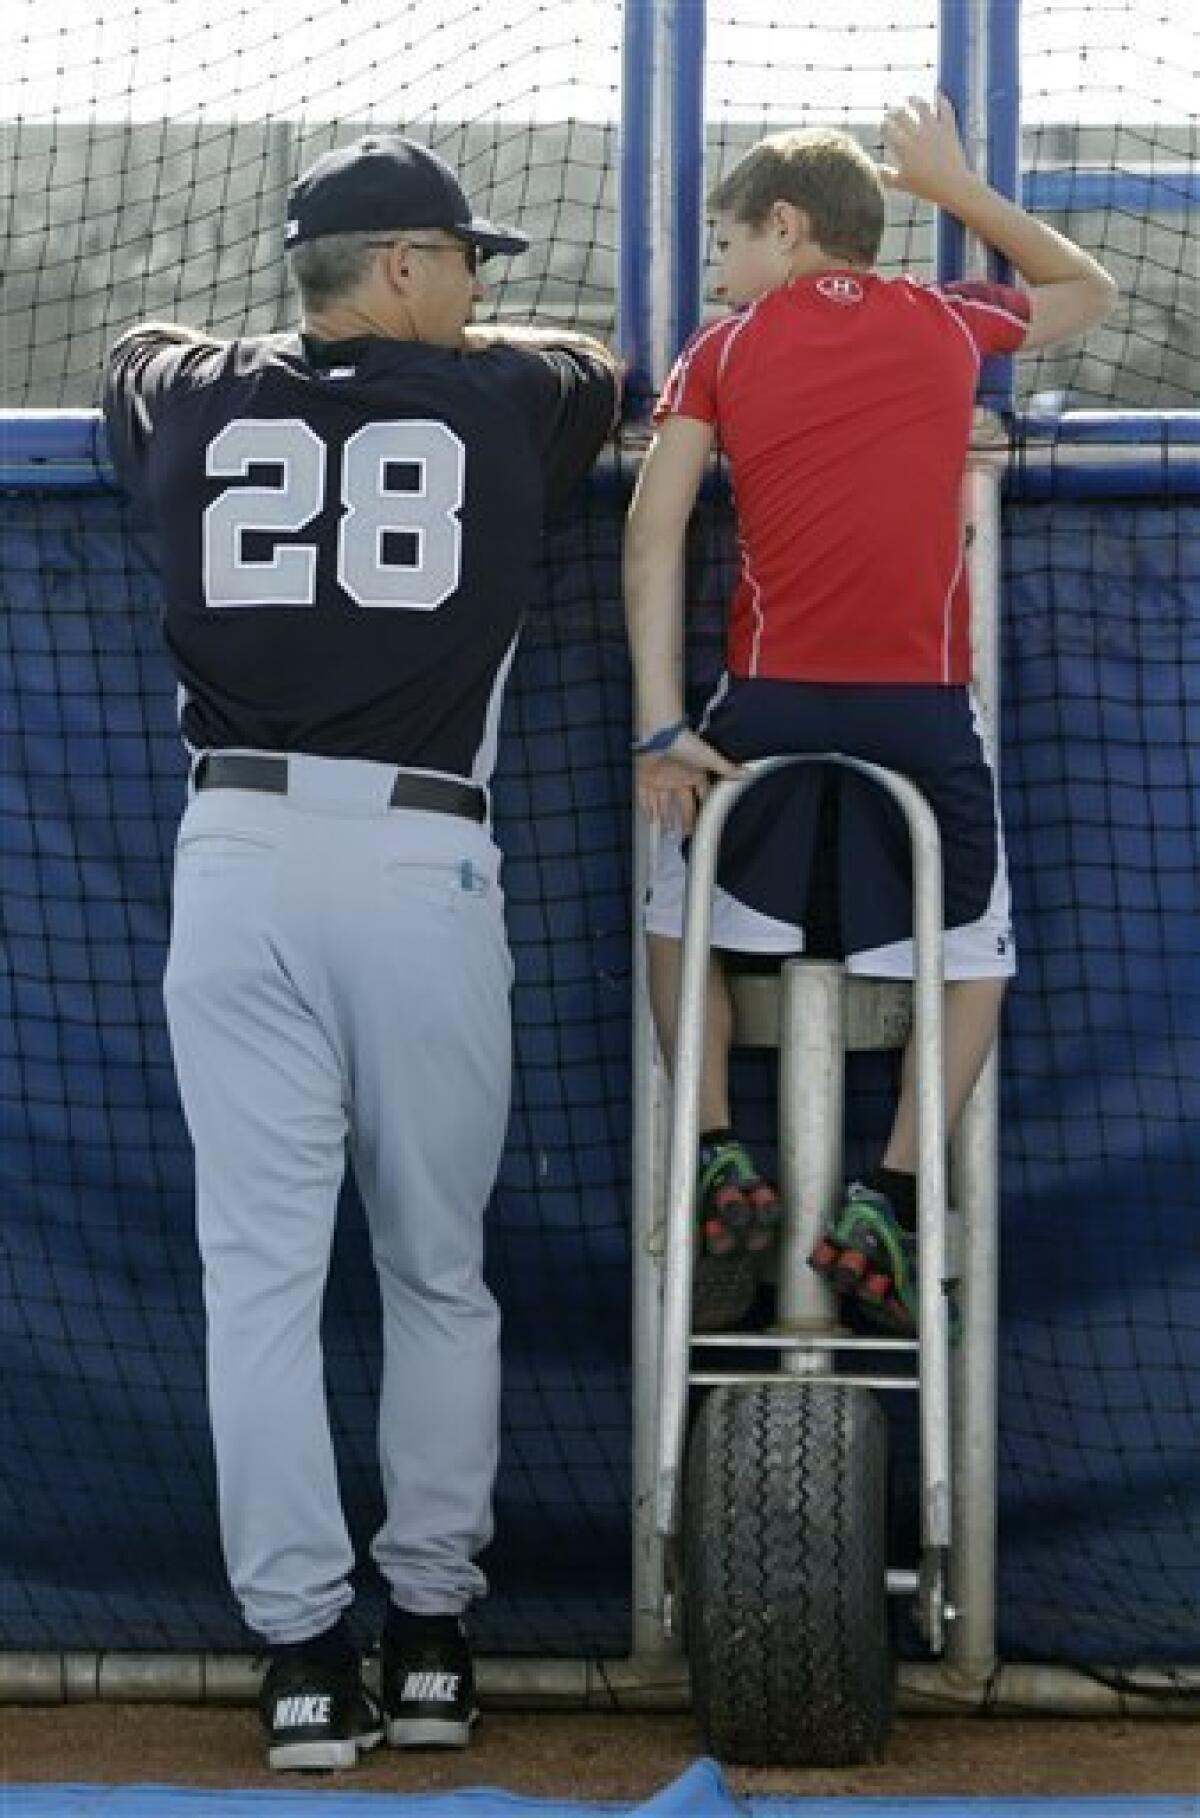 Burnett wild in Yankees' loss to Blue Jays - The San Diego Union-Tribune